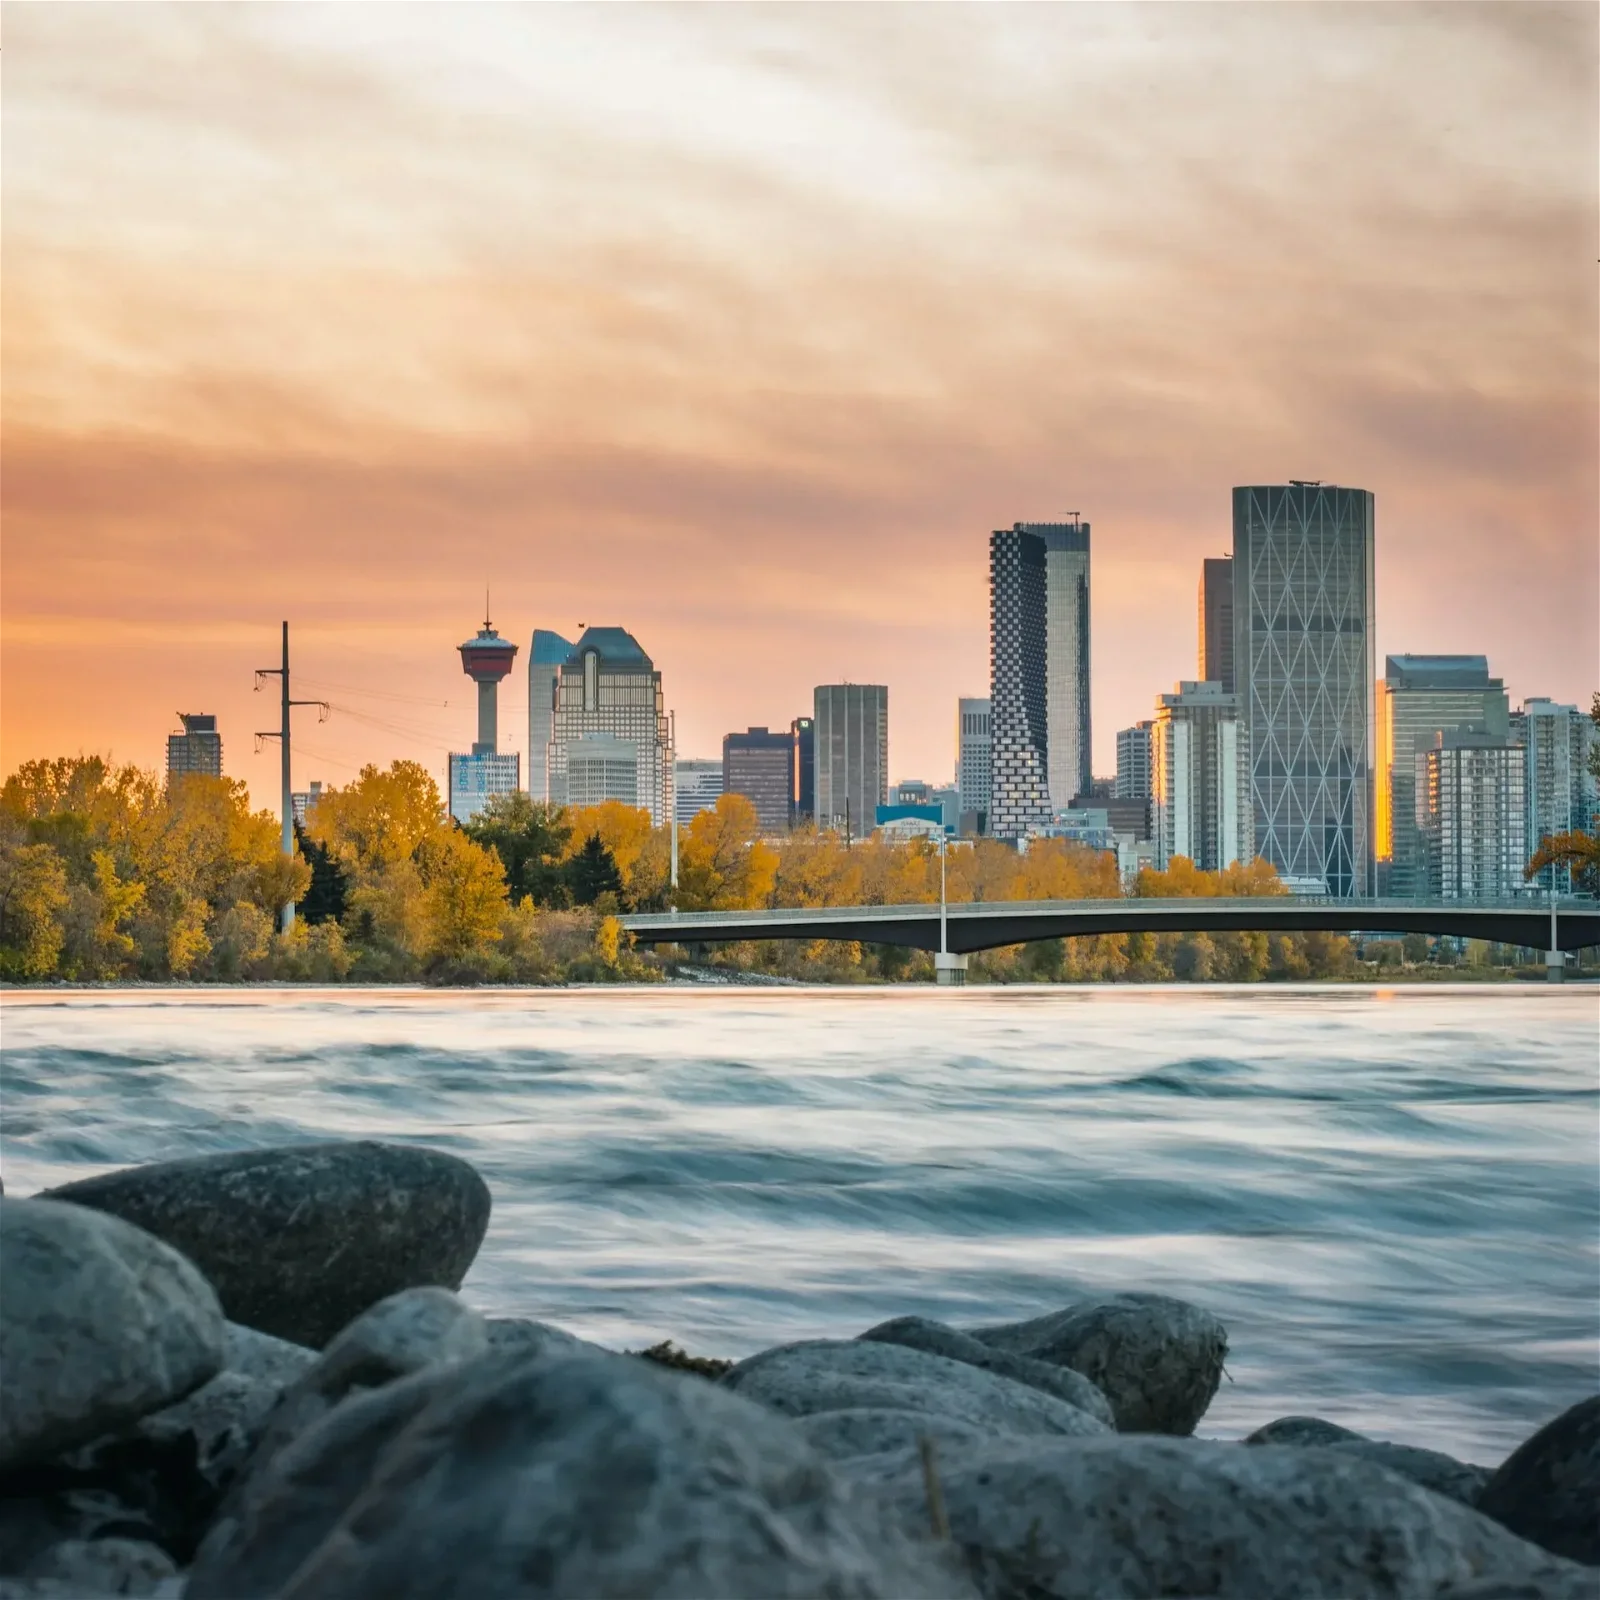 Edmonton, Alberta skyline above a body of water.